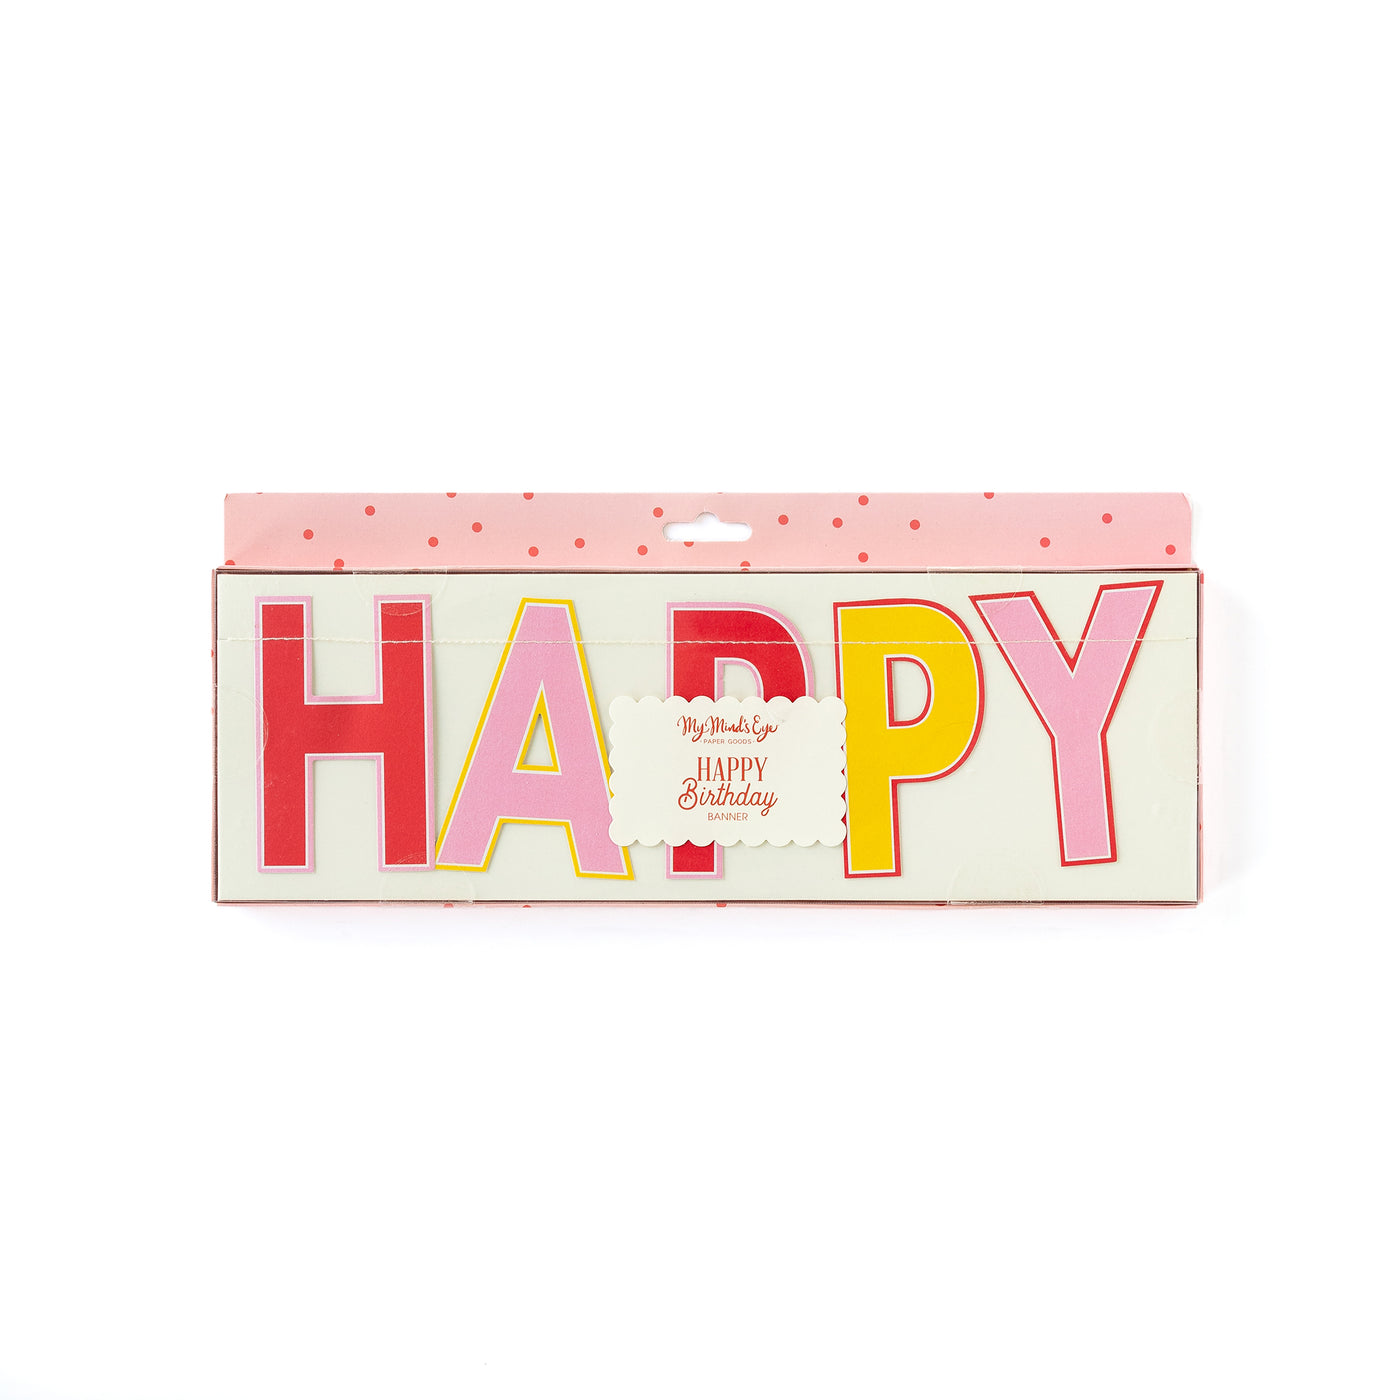 HBD805-Pink Birthday "Happy Birthday" Banner